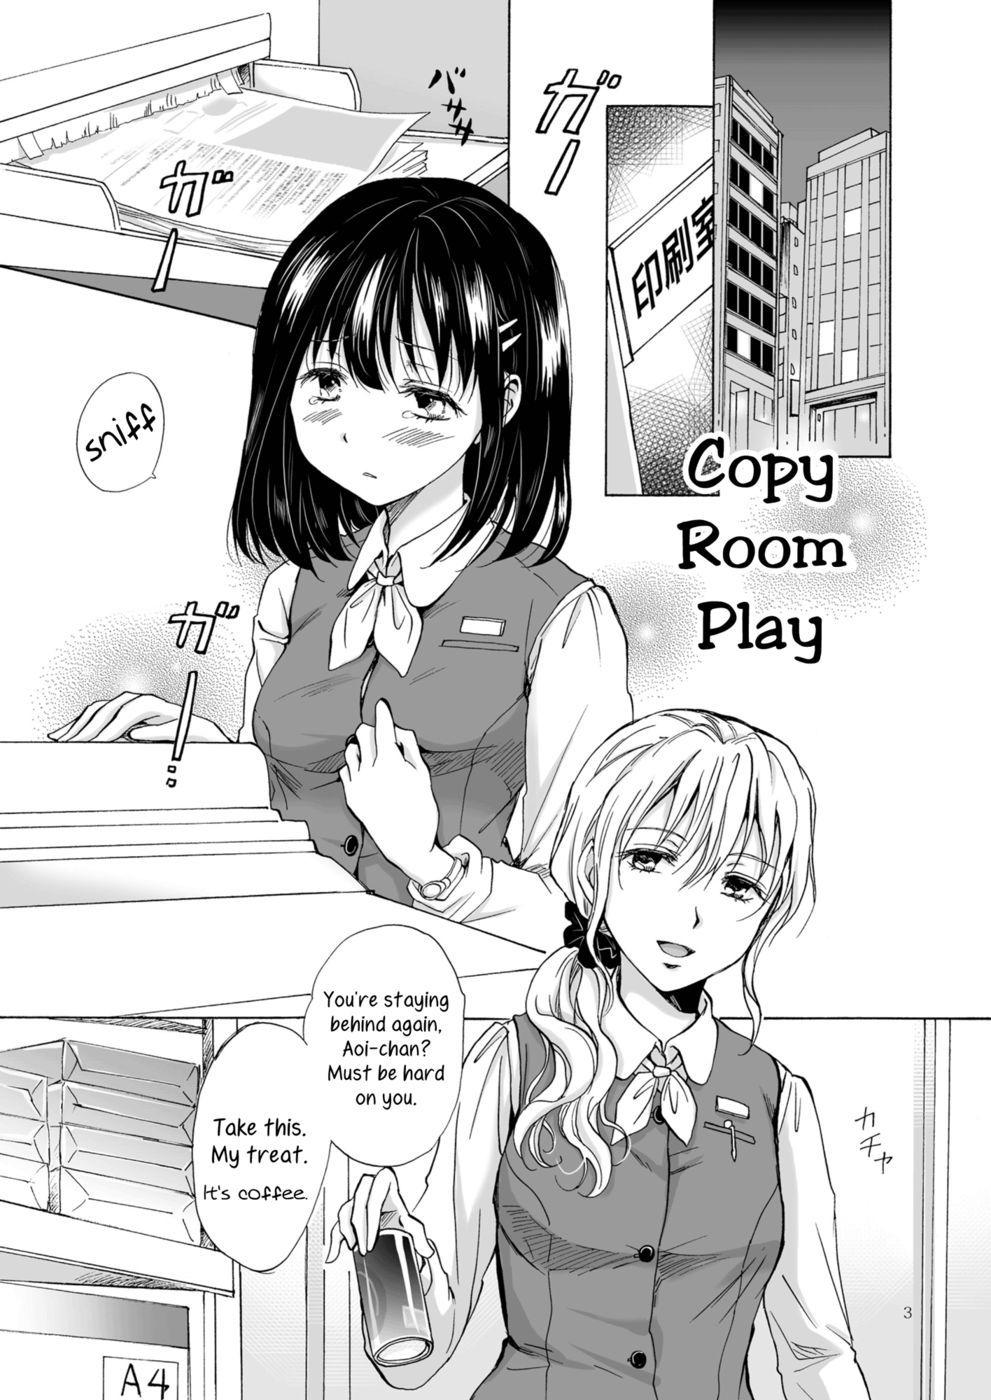 Lesbian Hentai Books - Copy Room Play 1 | Naughty Hentai Lesbian Manga Aoi-chan Documents